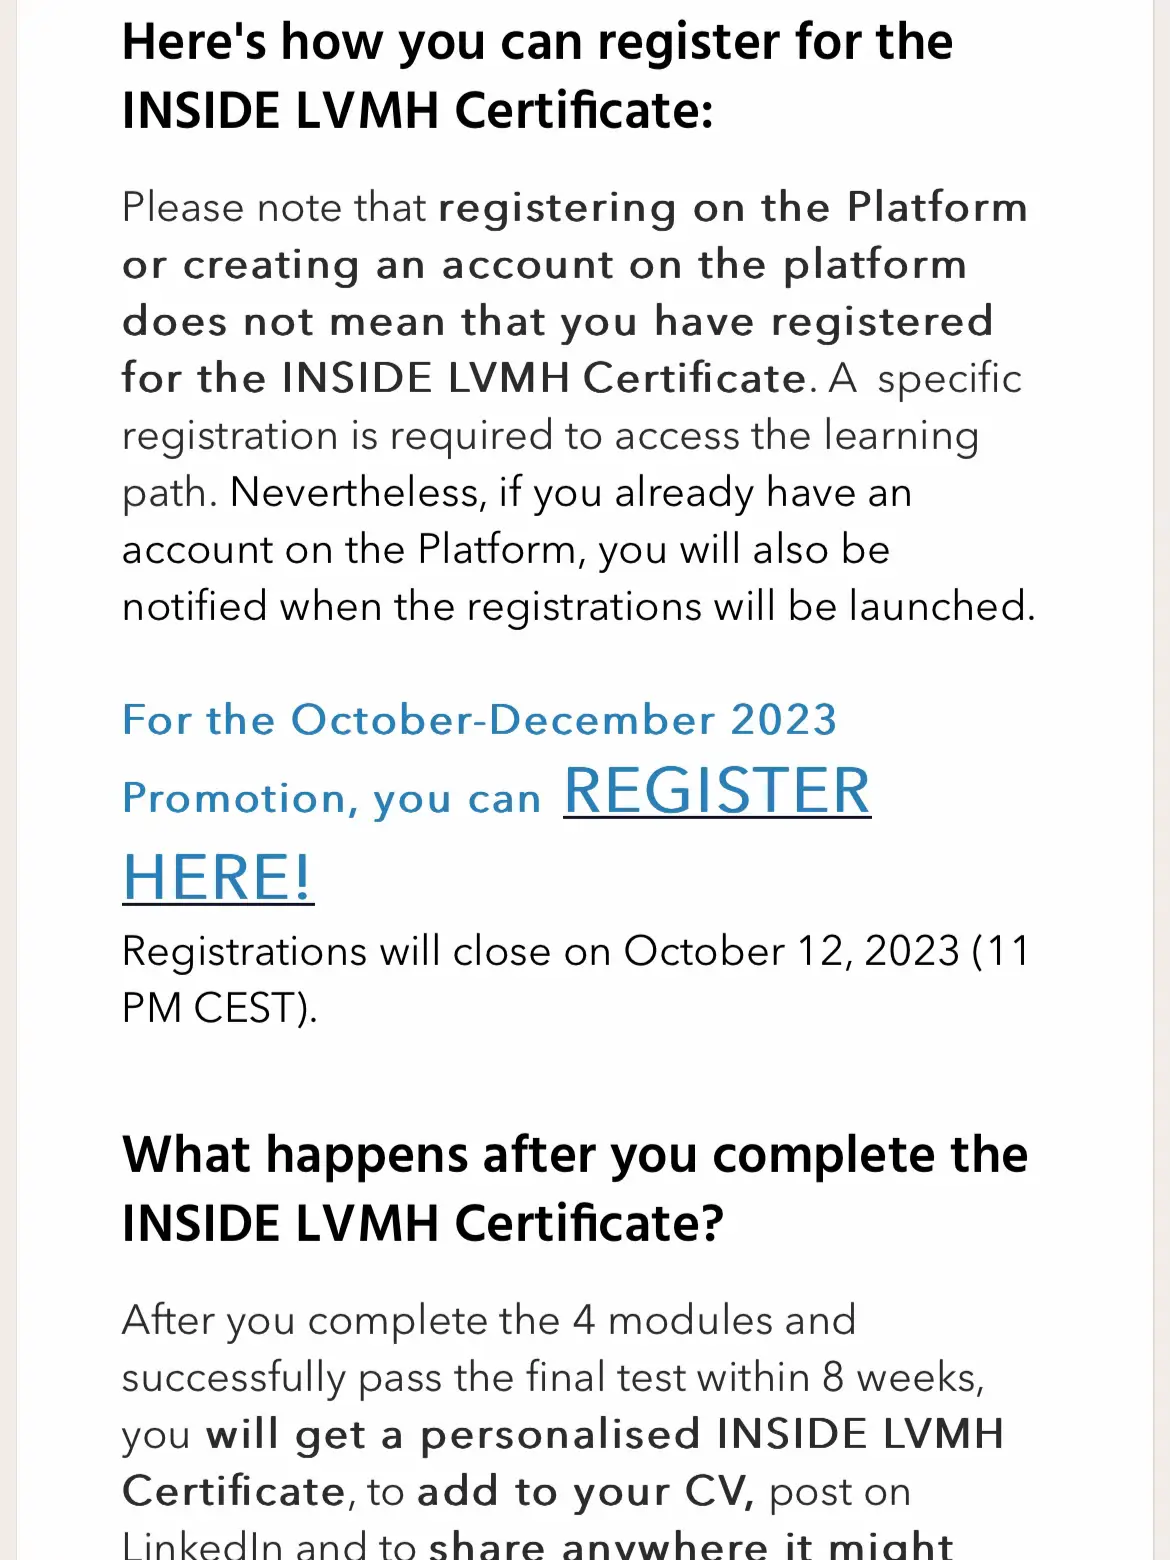 LVMH on Campus INSIDE Certificate Presentation